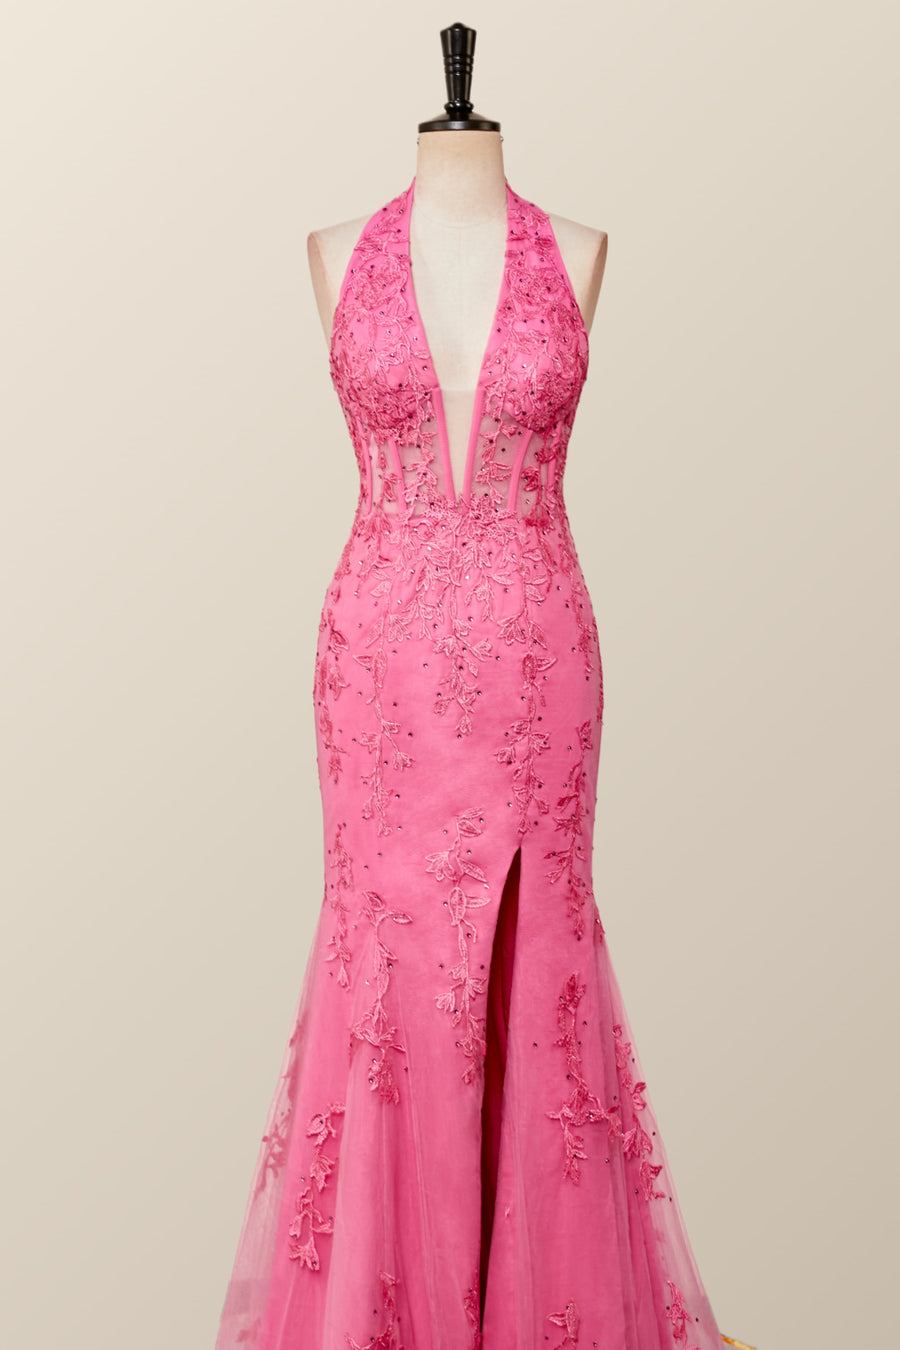 Halter Hot Pink Lace Mermaid Prom Dress